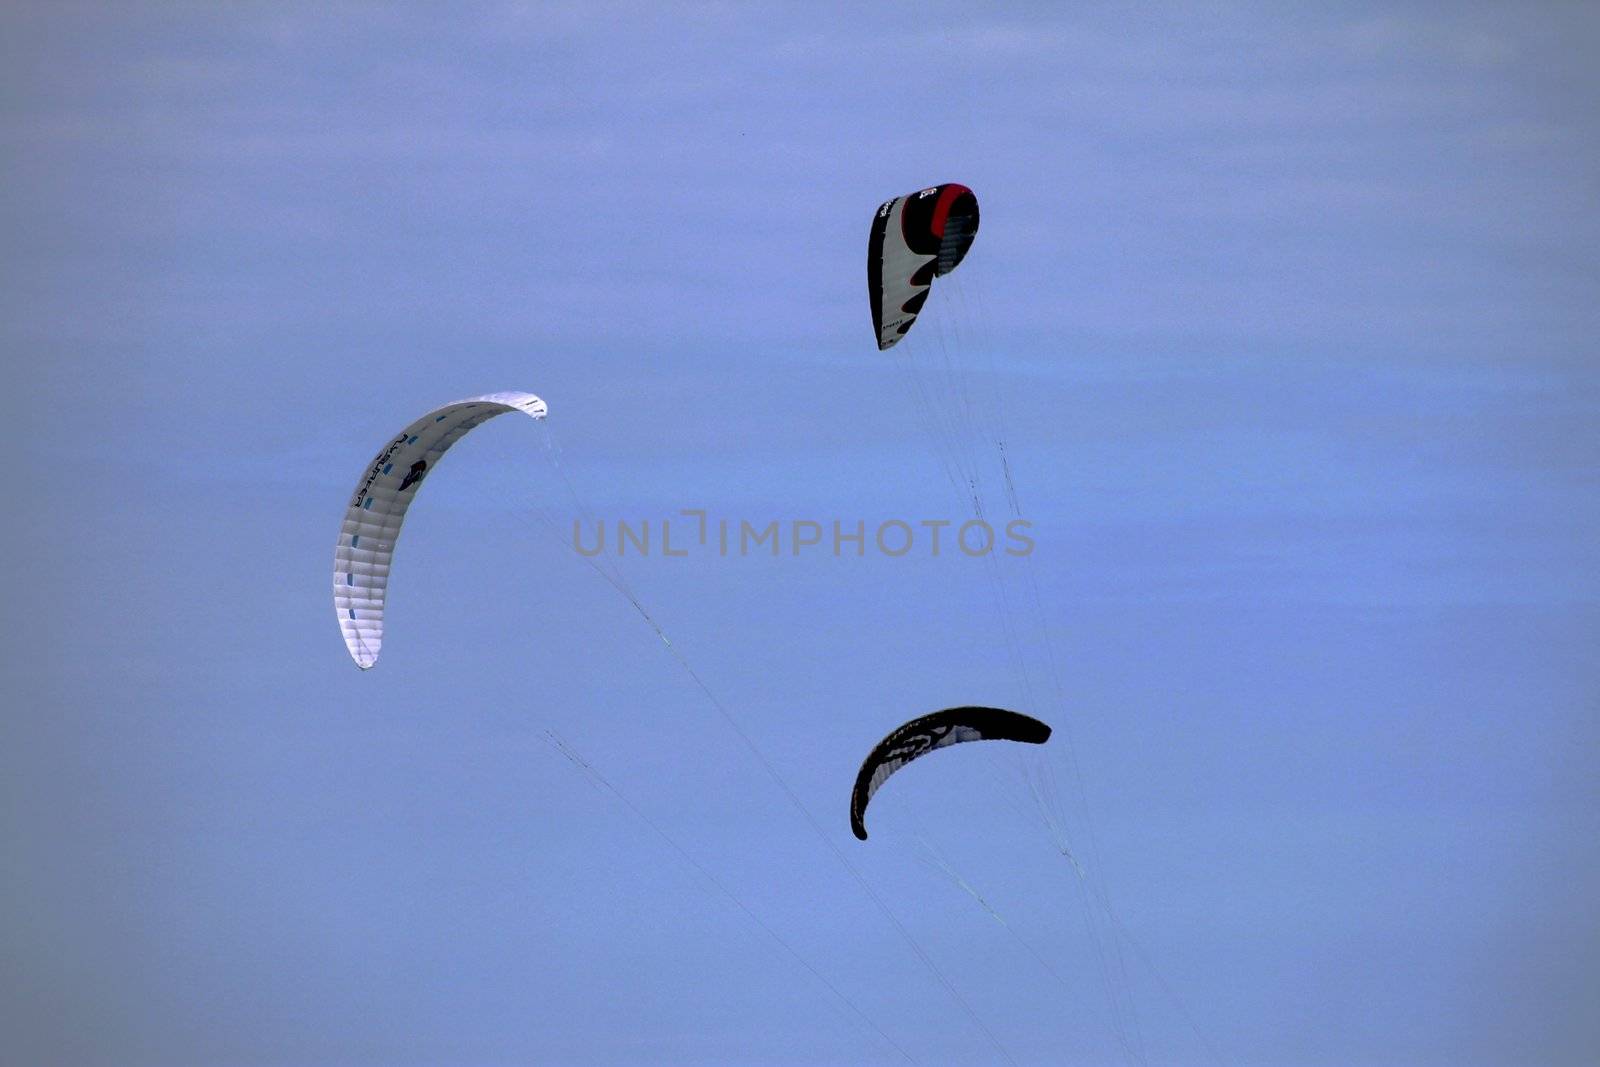 Surfboard kites flying of a summer beach